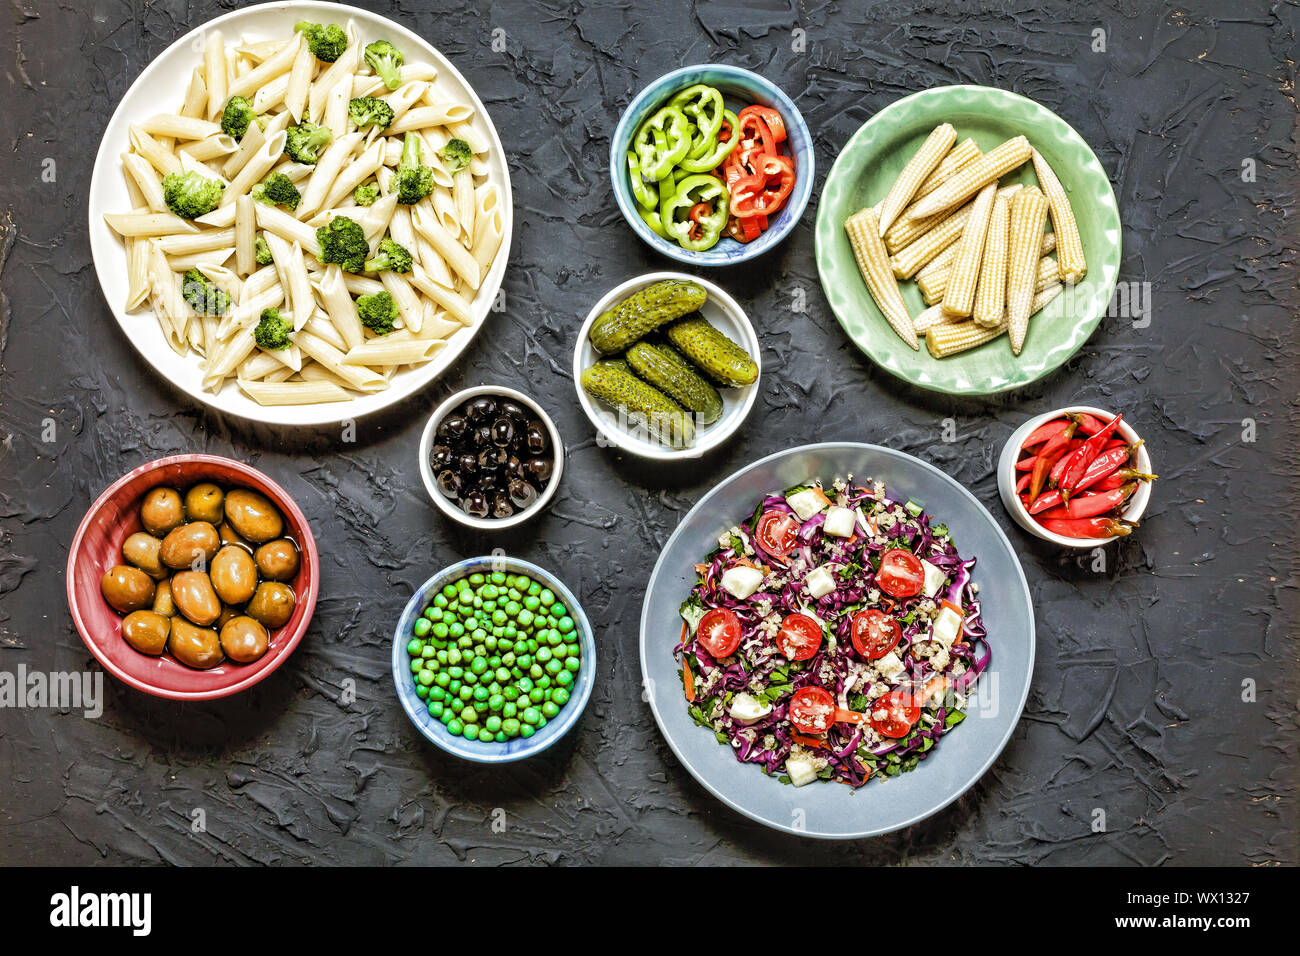 Detox, vegetarian food, broccoli, of Manicotti pasta, Penne pasta, quinoa salad, olives, Stock Photo